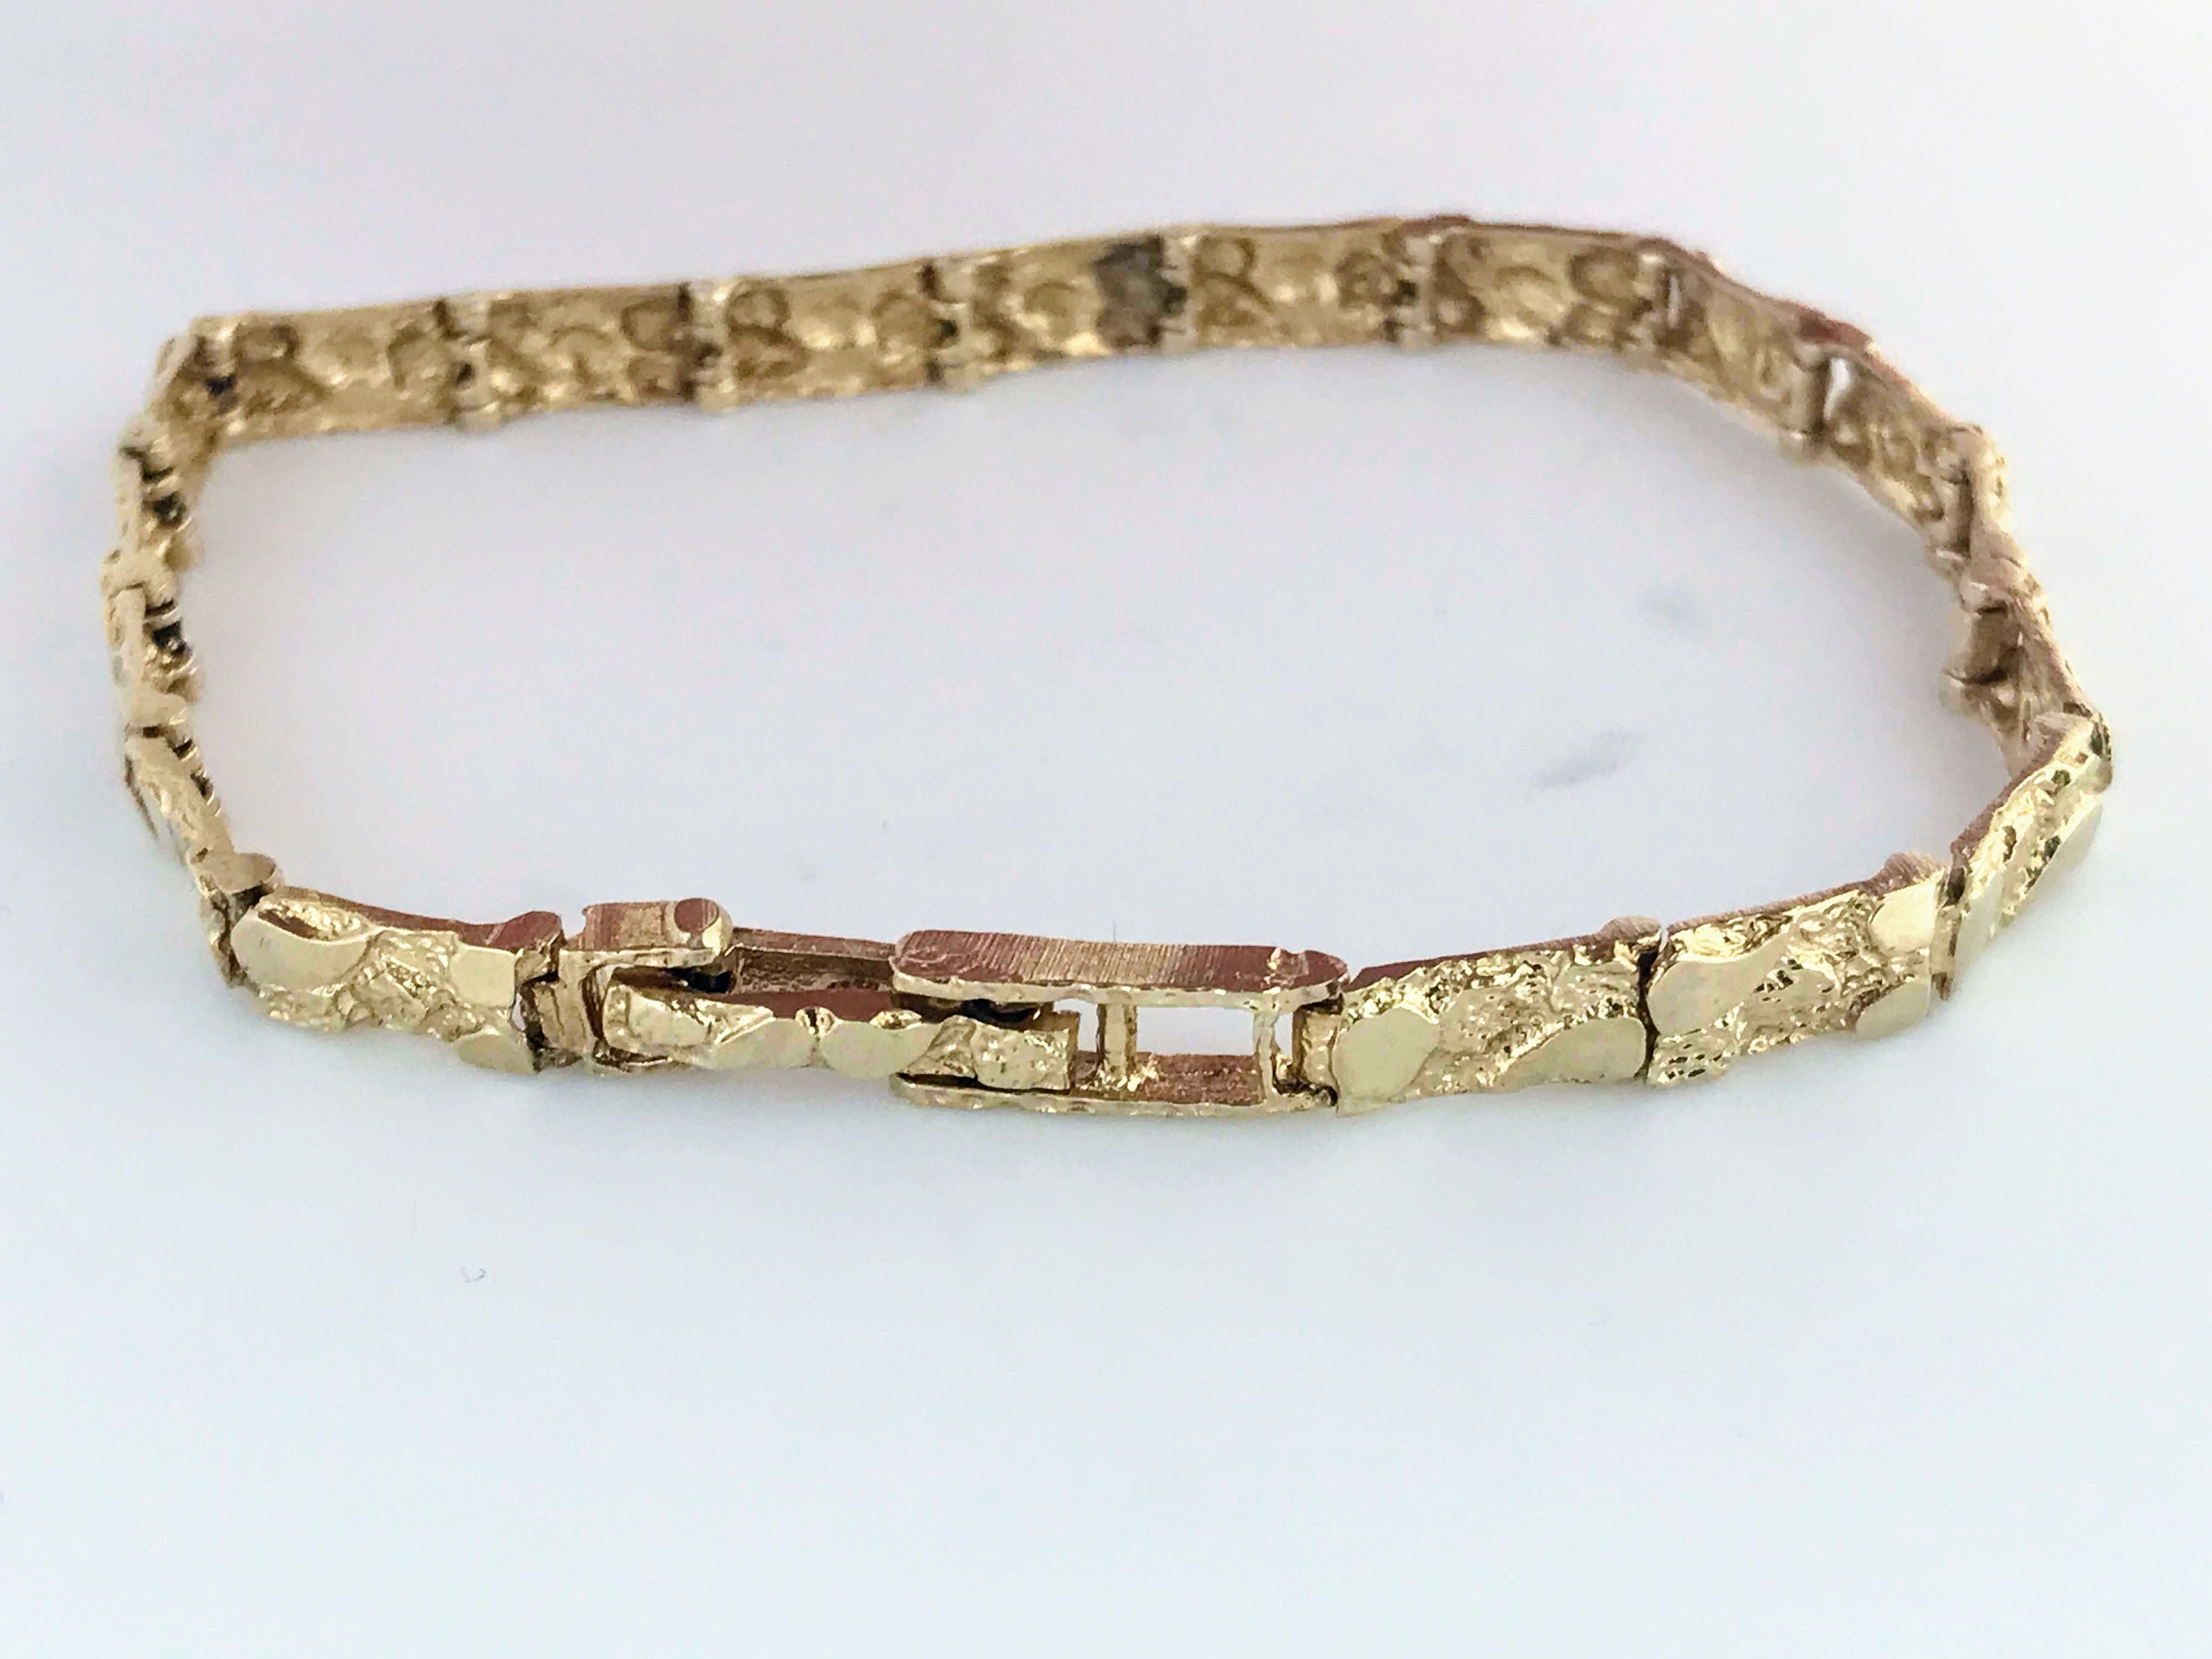 Men's Gold Bracelet, 8mm thick Gold Nugget Cuff Bracelet, Large